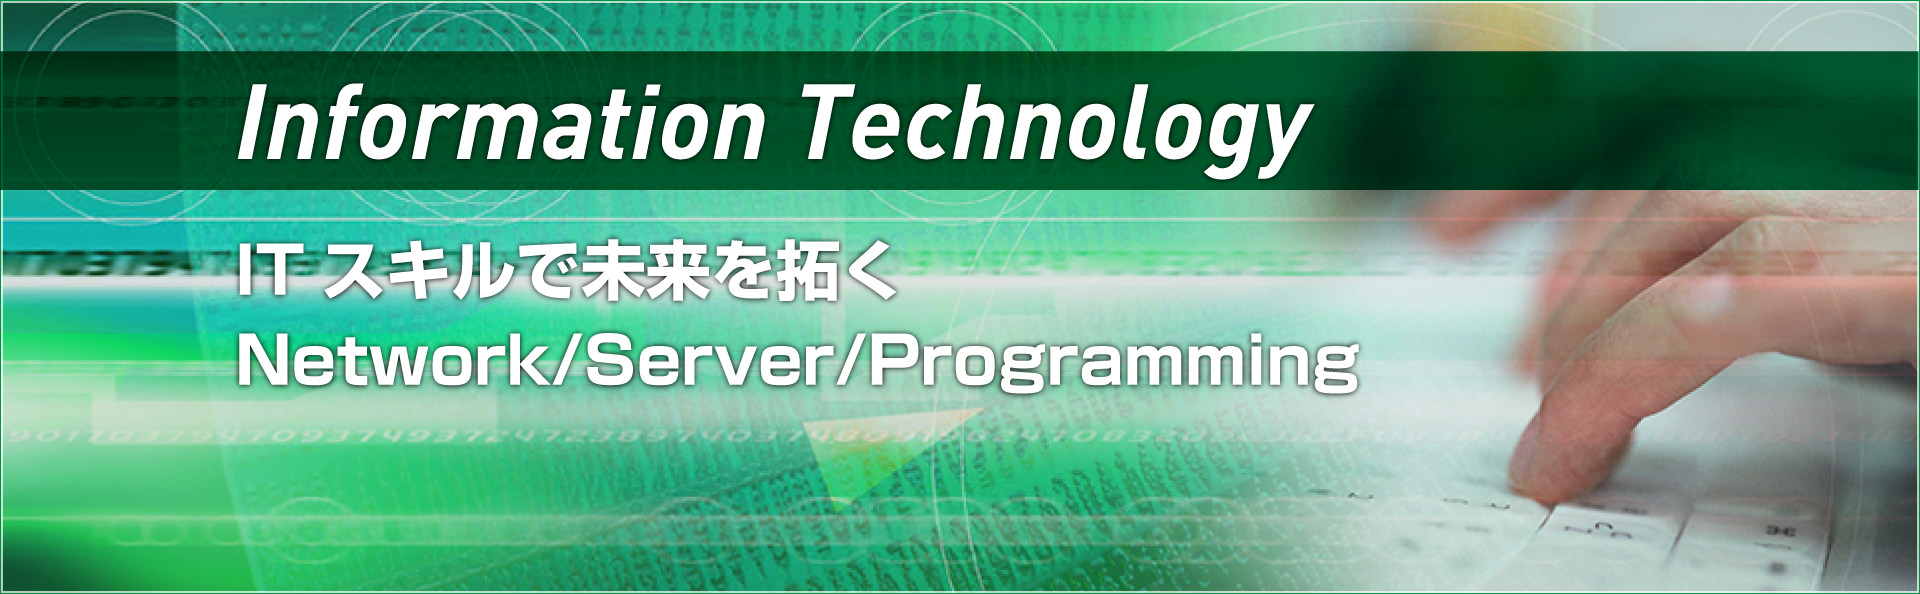 Information Technology - ITスキルで未来を拓くNetwork/Server/Programming